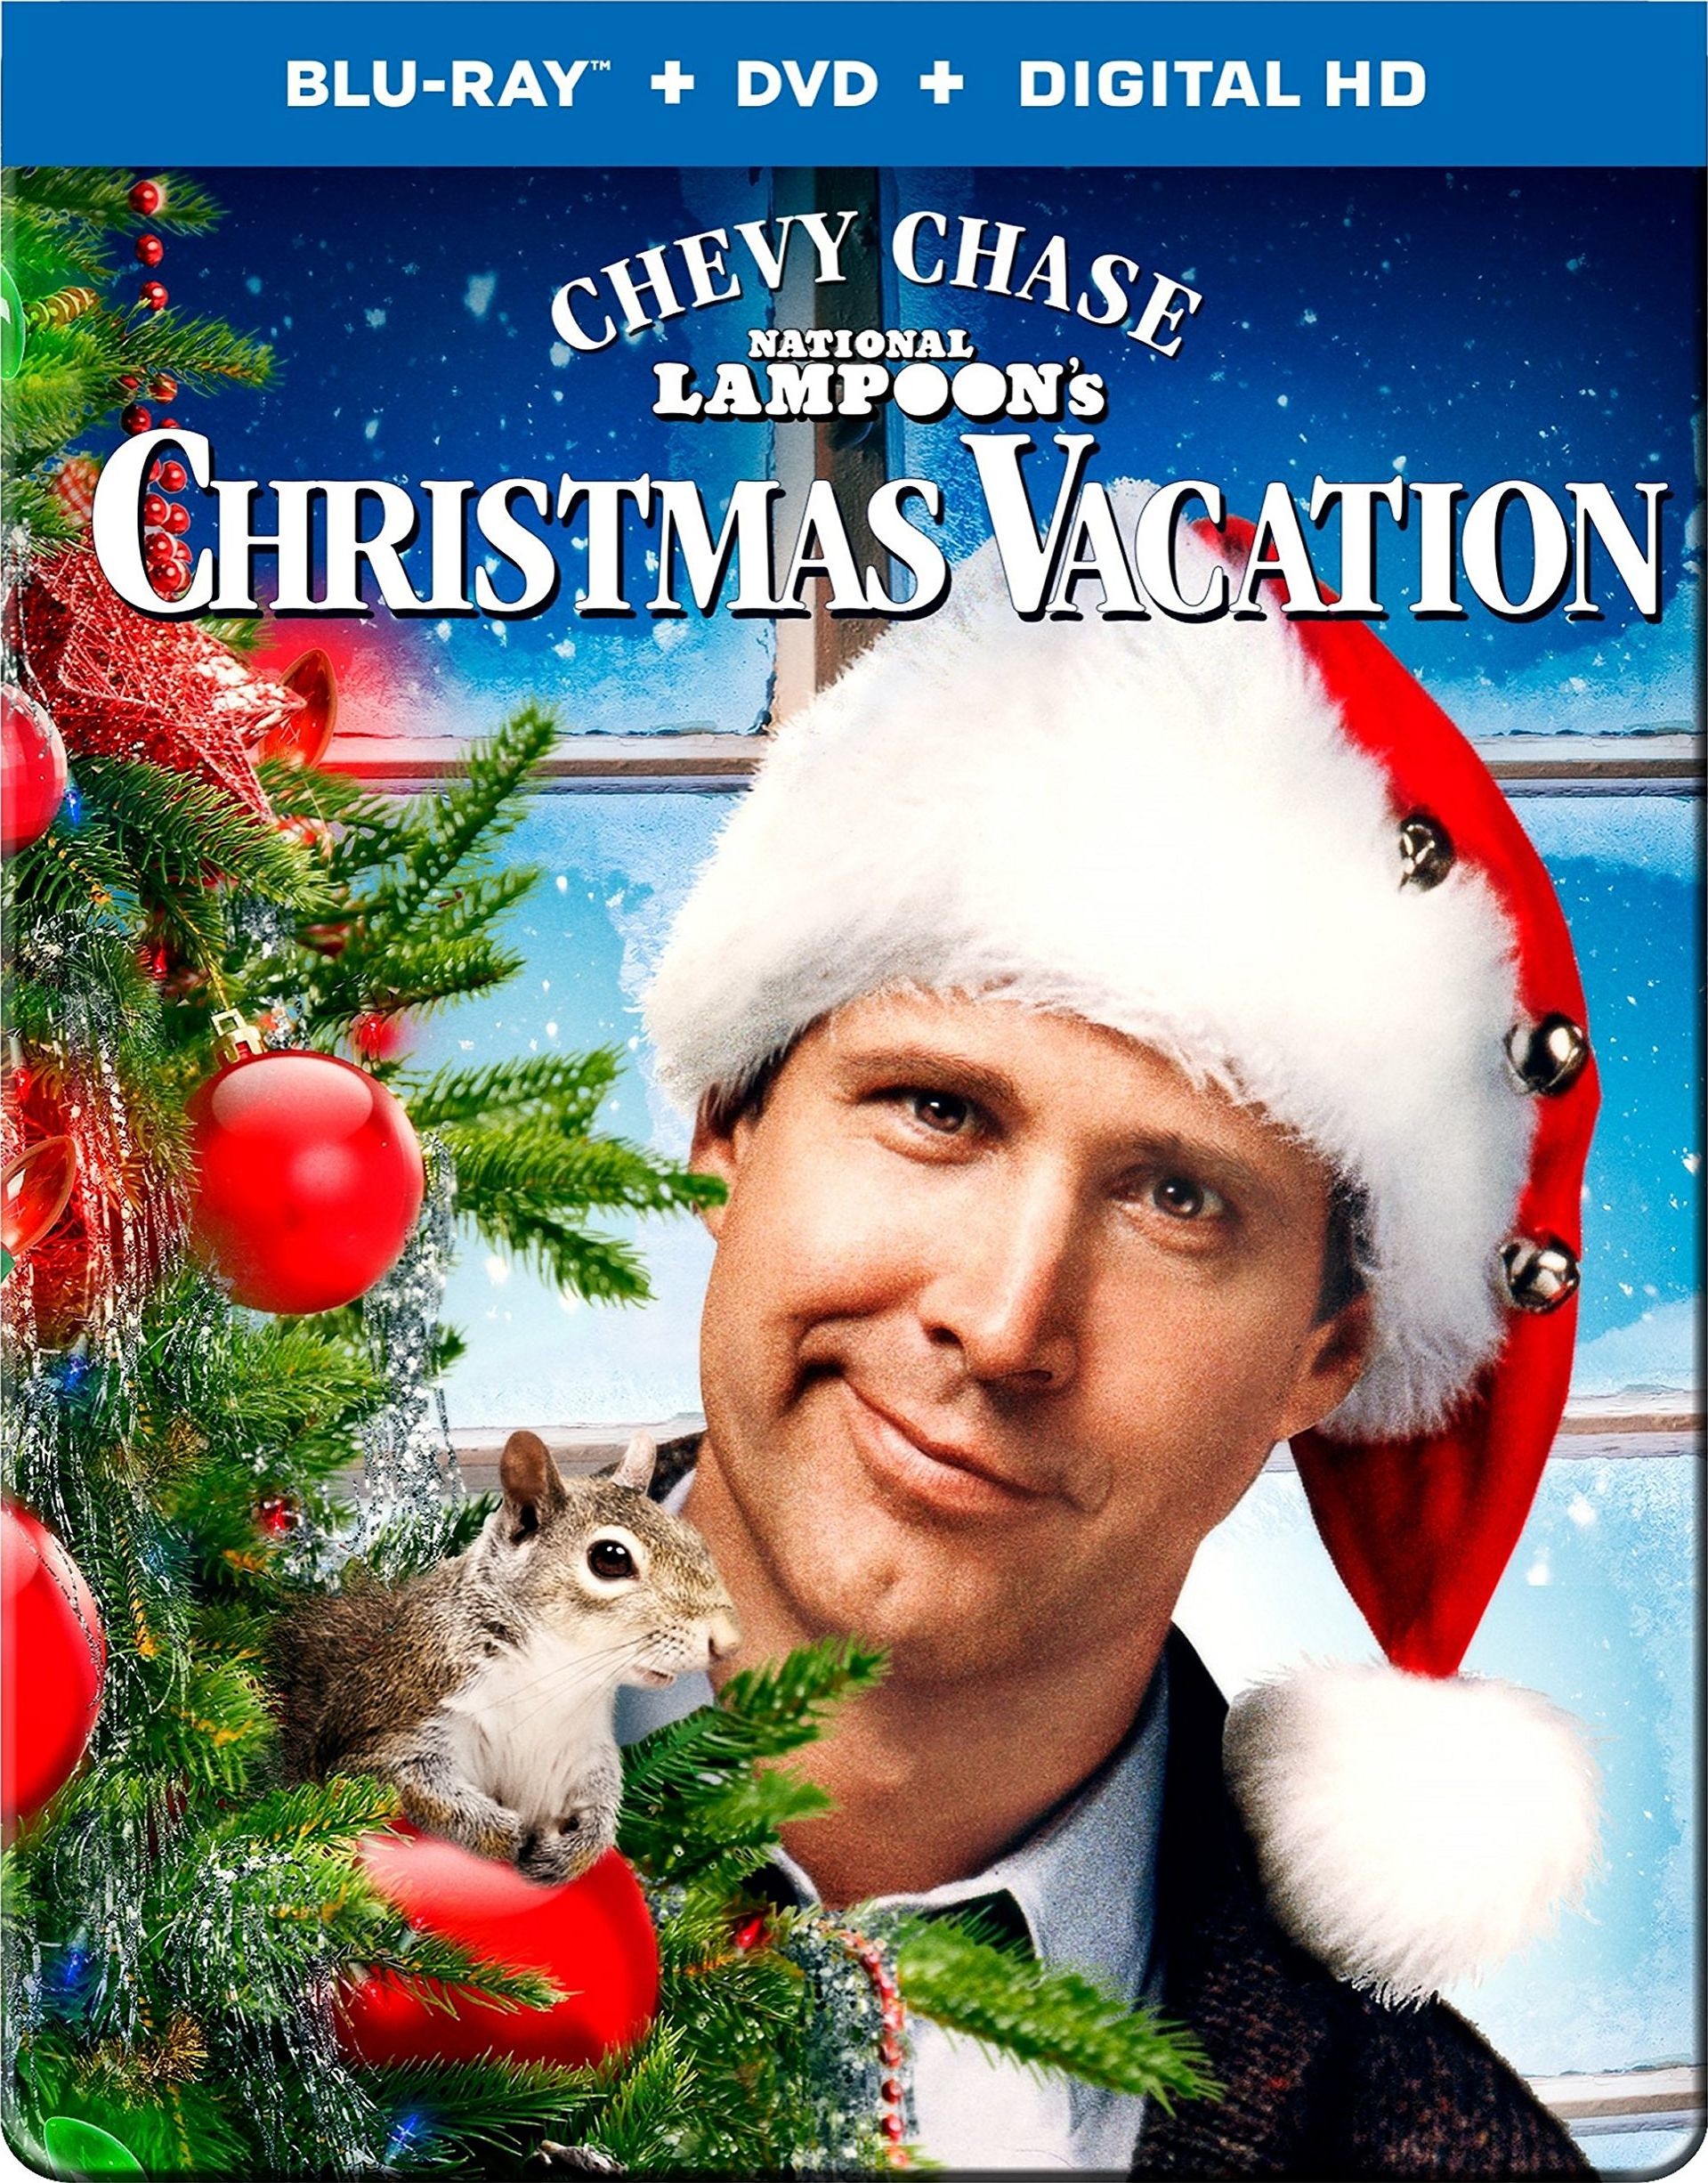 National Lampoons Christmas Vacation Wallpaper.